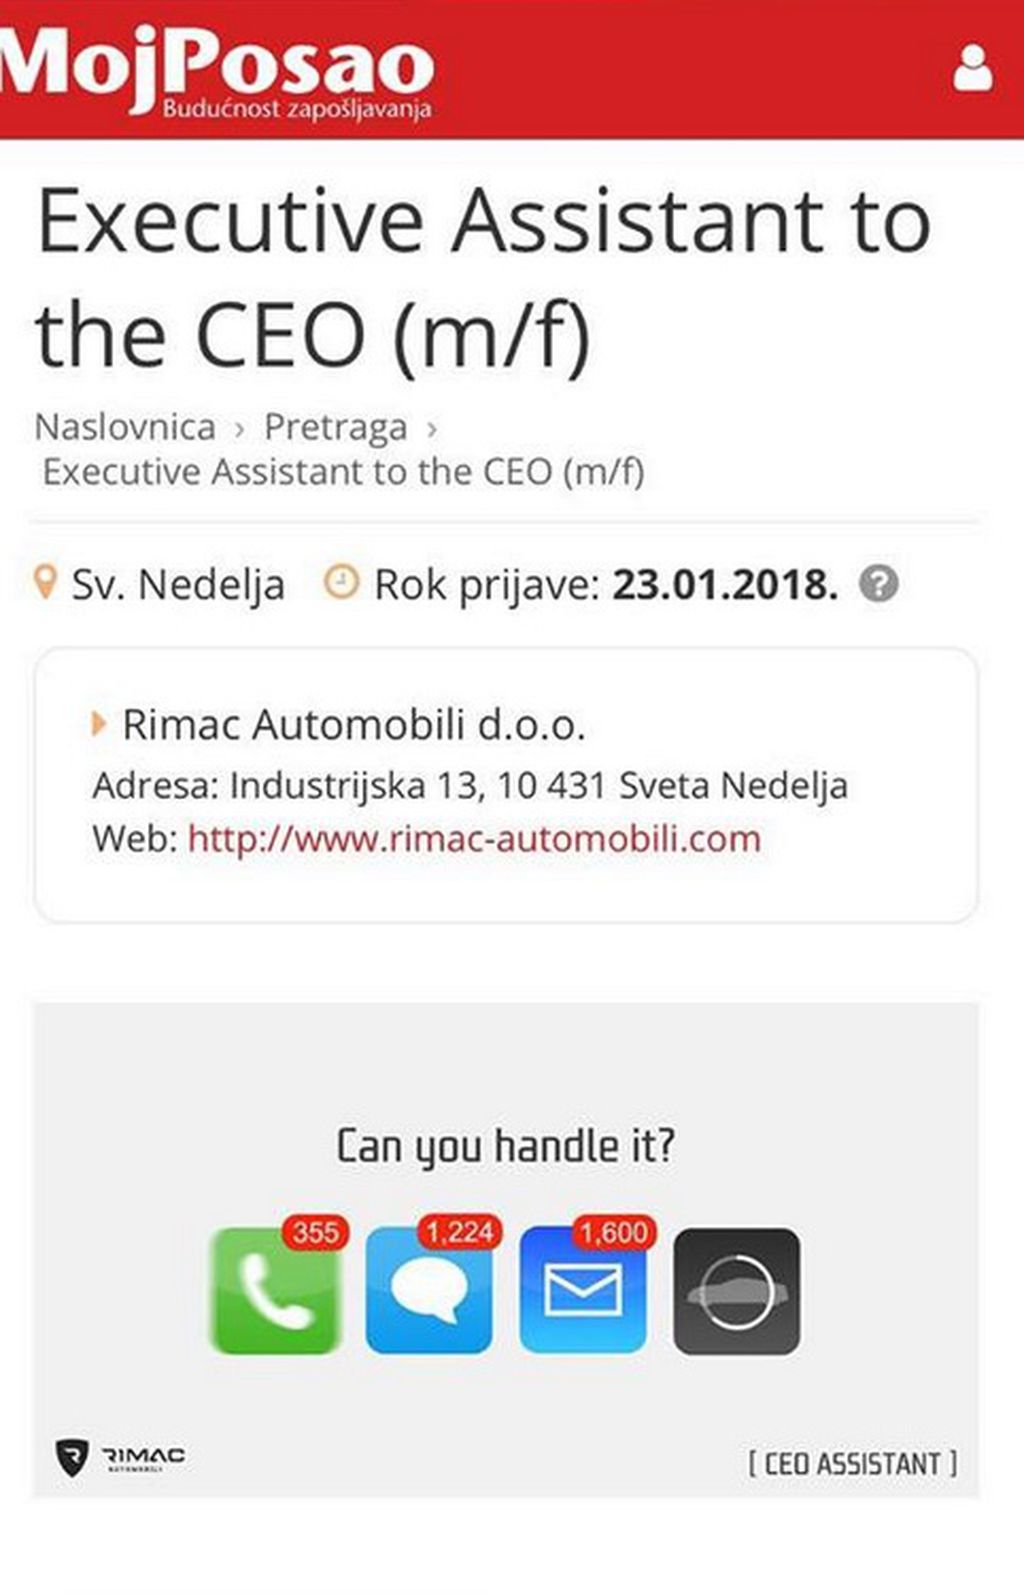 Mate Rimac traži asistenta (Screenshot moj-posao.net)